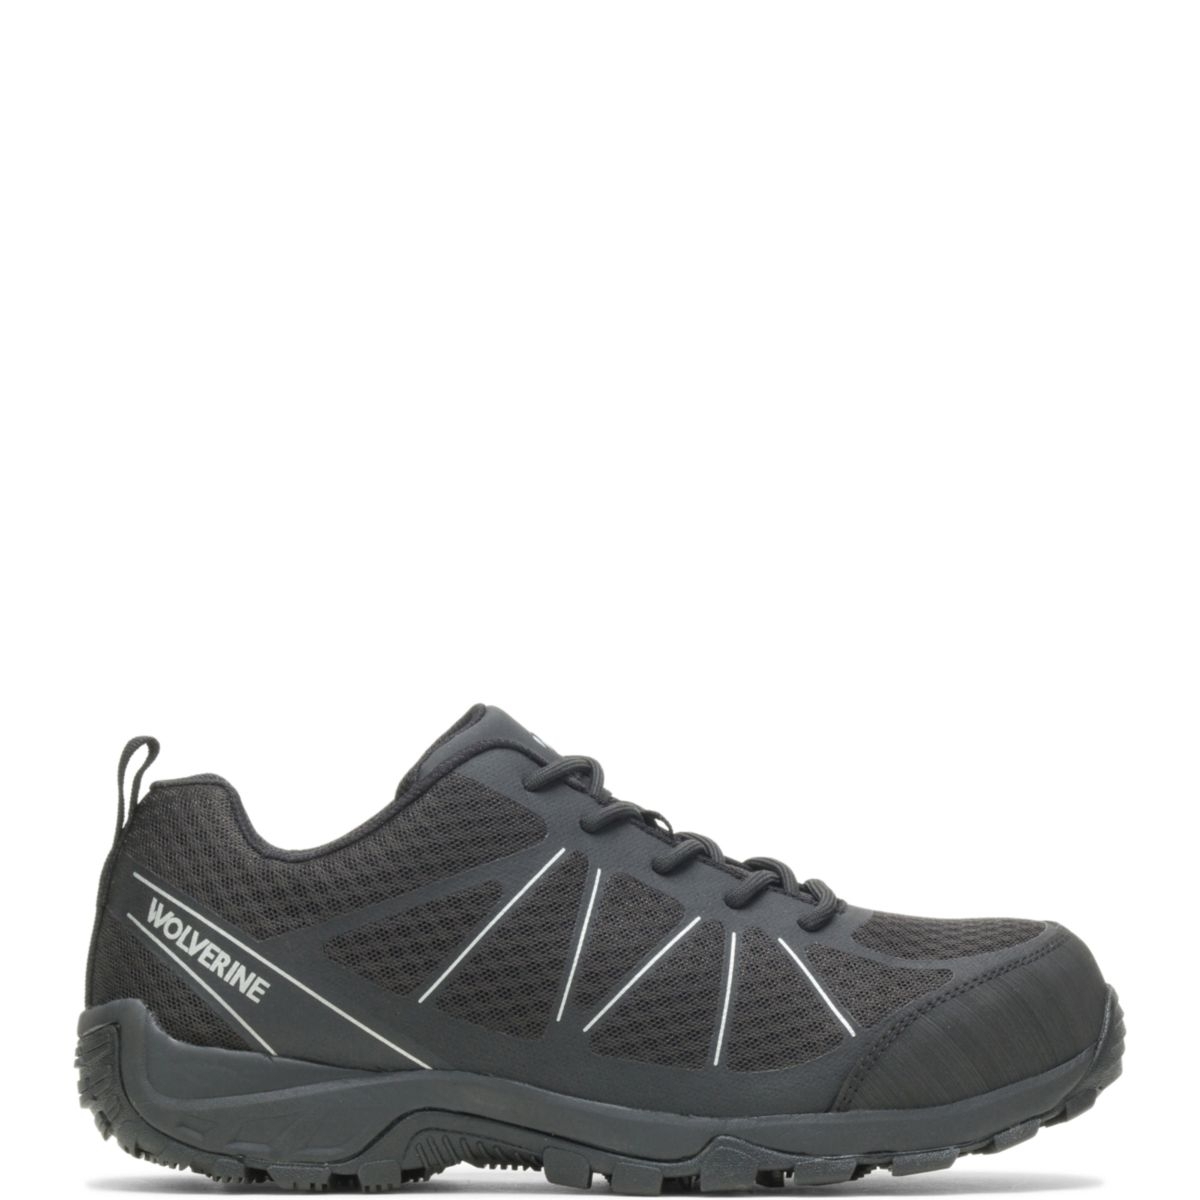 WOLVERINE Men's Amherst II CarbonMAXÂ® Composite Toe Work Shoe Black - W201147 BLACK - BLACK, 11.5